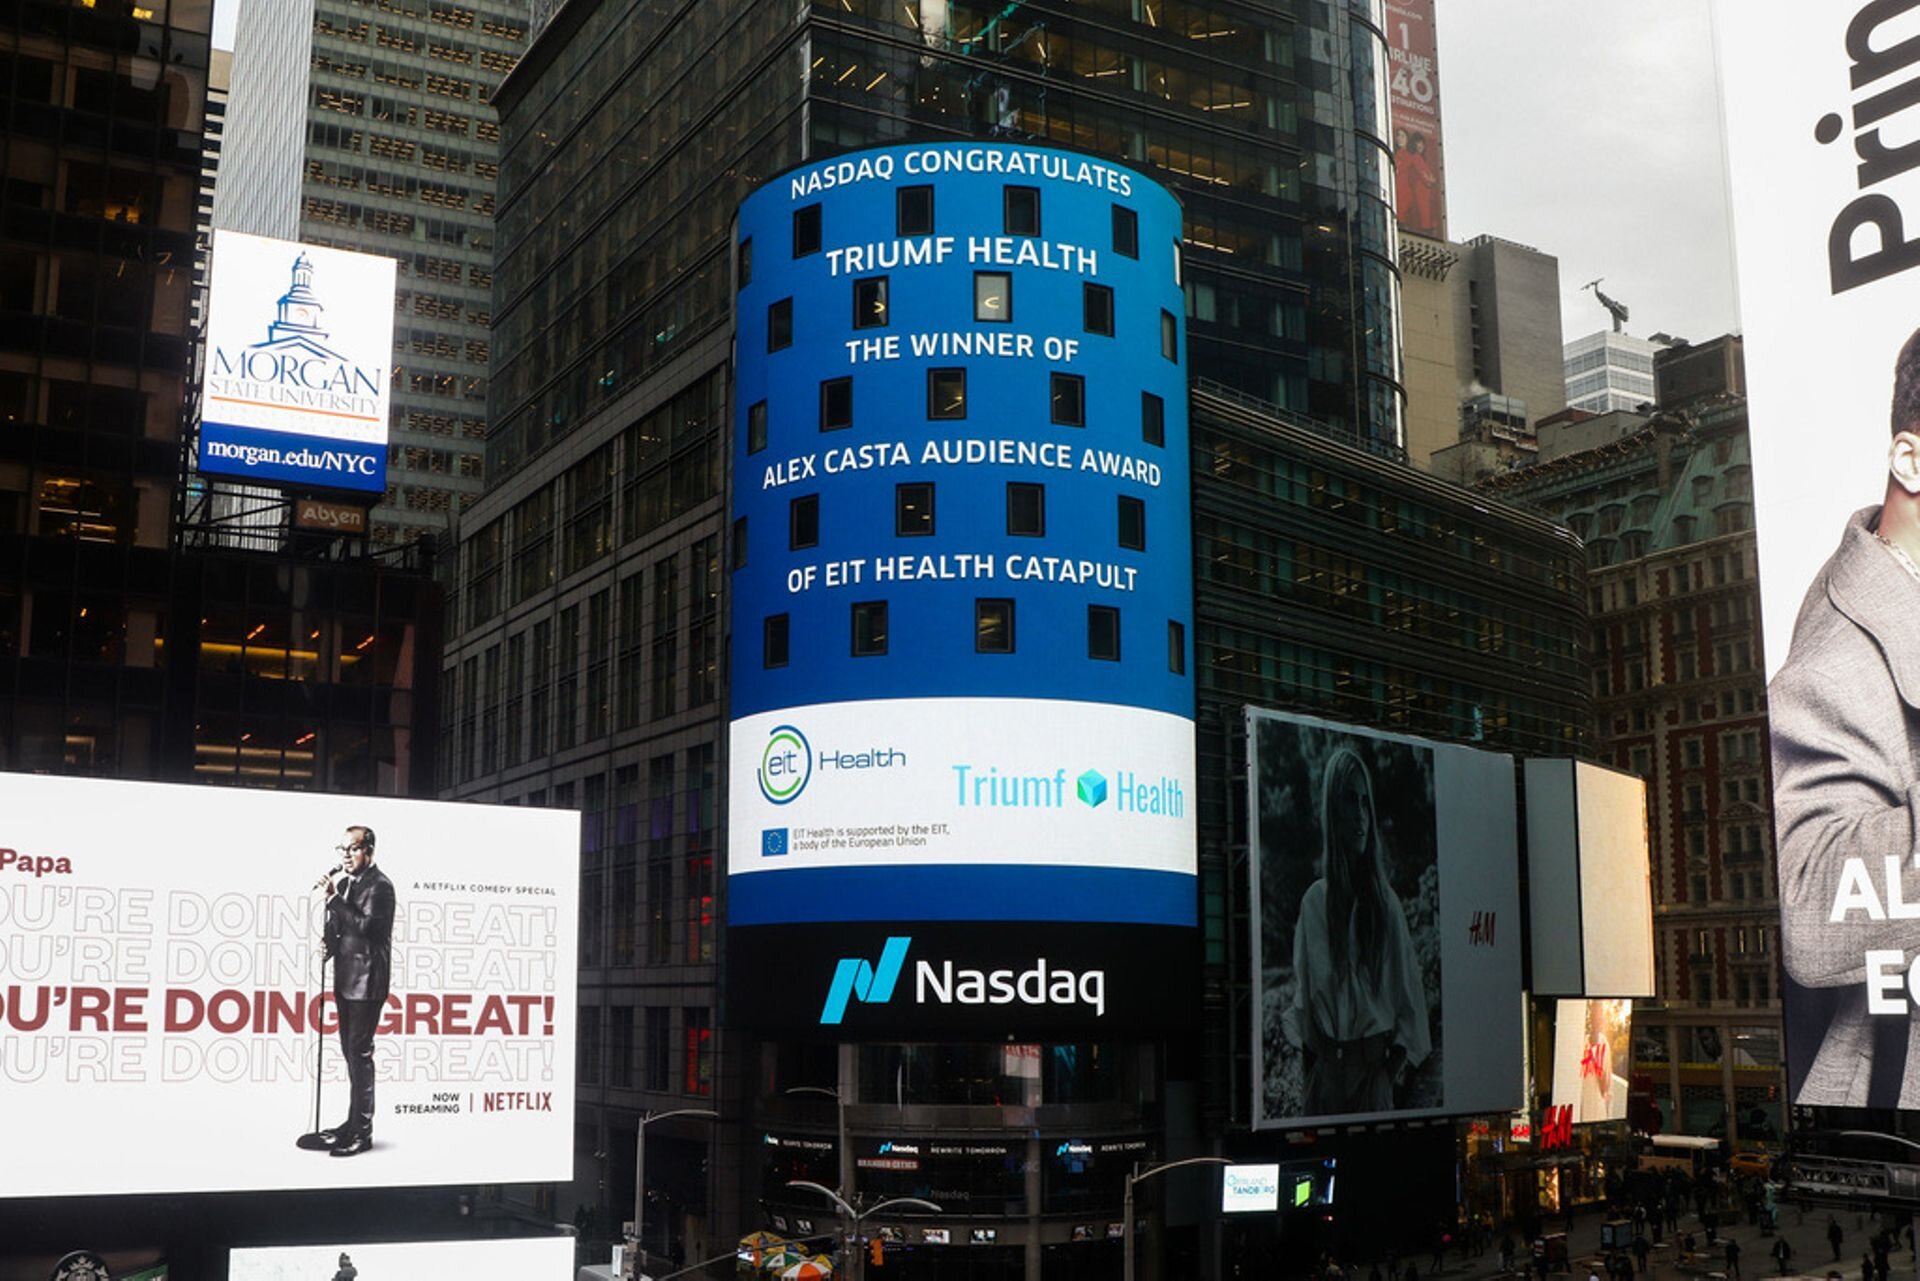 Nasdaq congratulates Triumf Health at Times Square